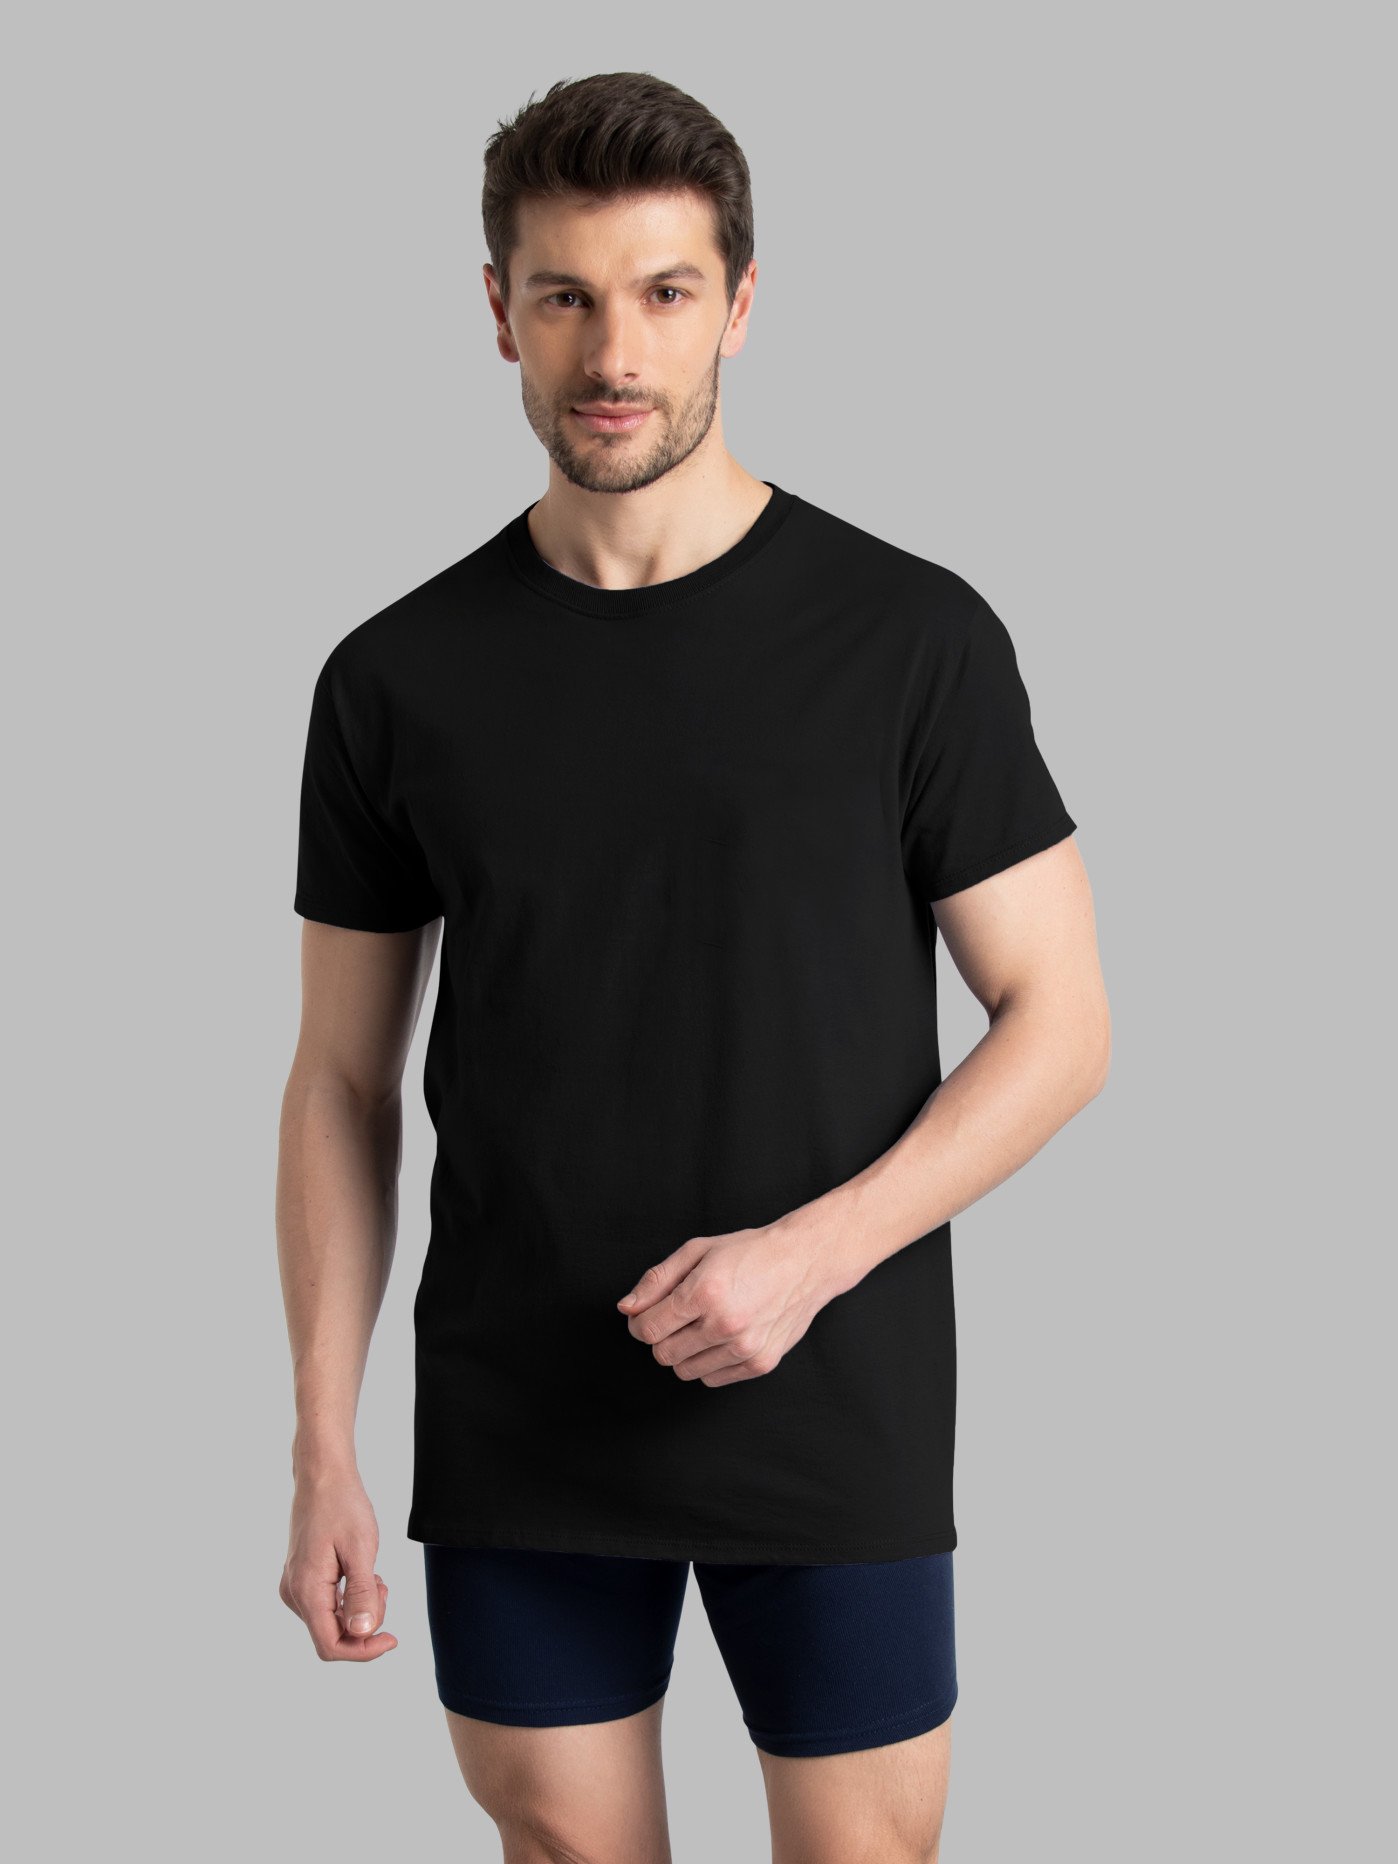 New Popular KIX Band Shirt Classic Gift For Fans Unisex All Size Black T- Shirt